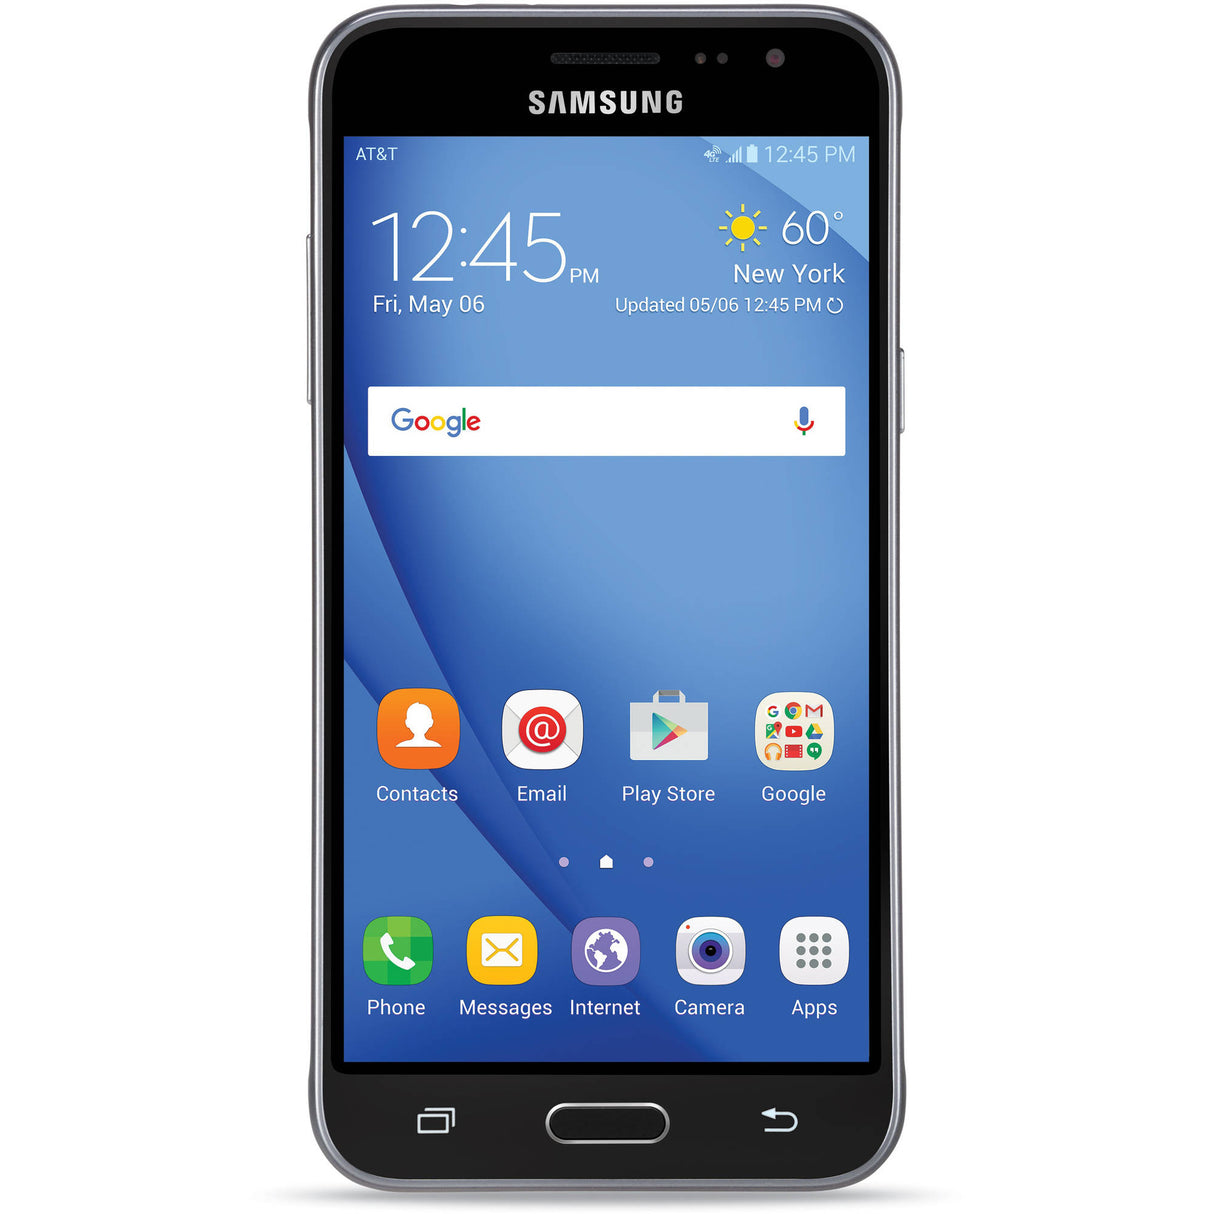 Samsung Galaxy Express Prime - 16 GB - Dark Gray - AT&T - GSM